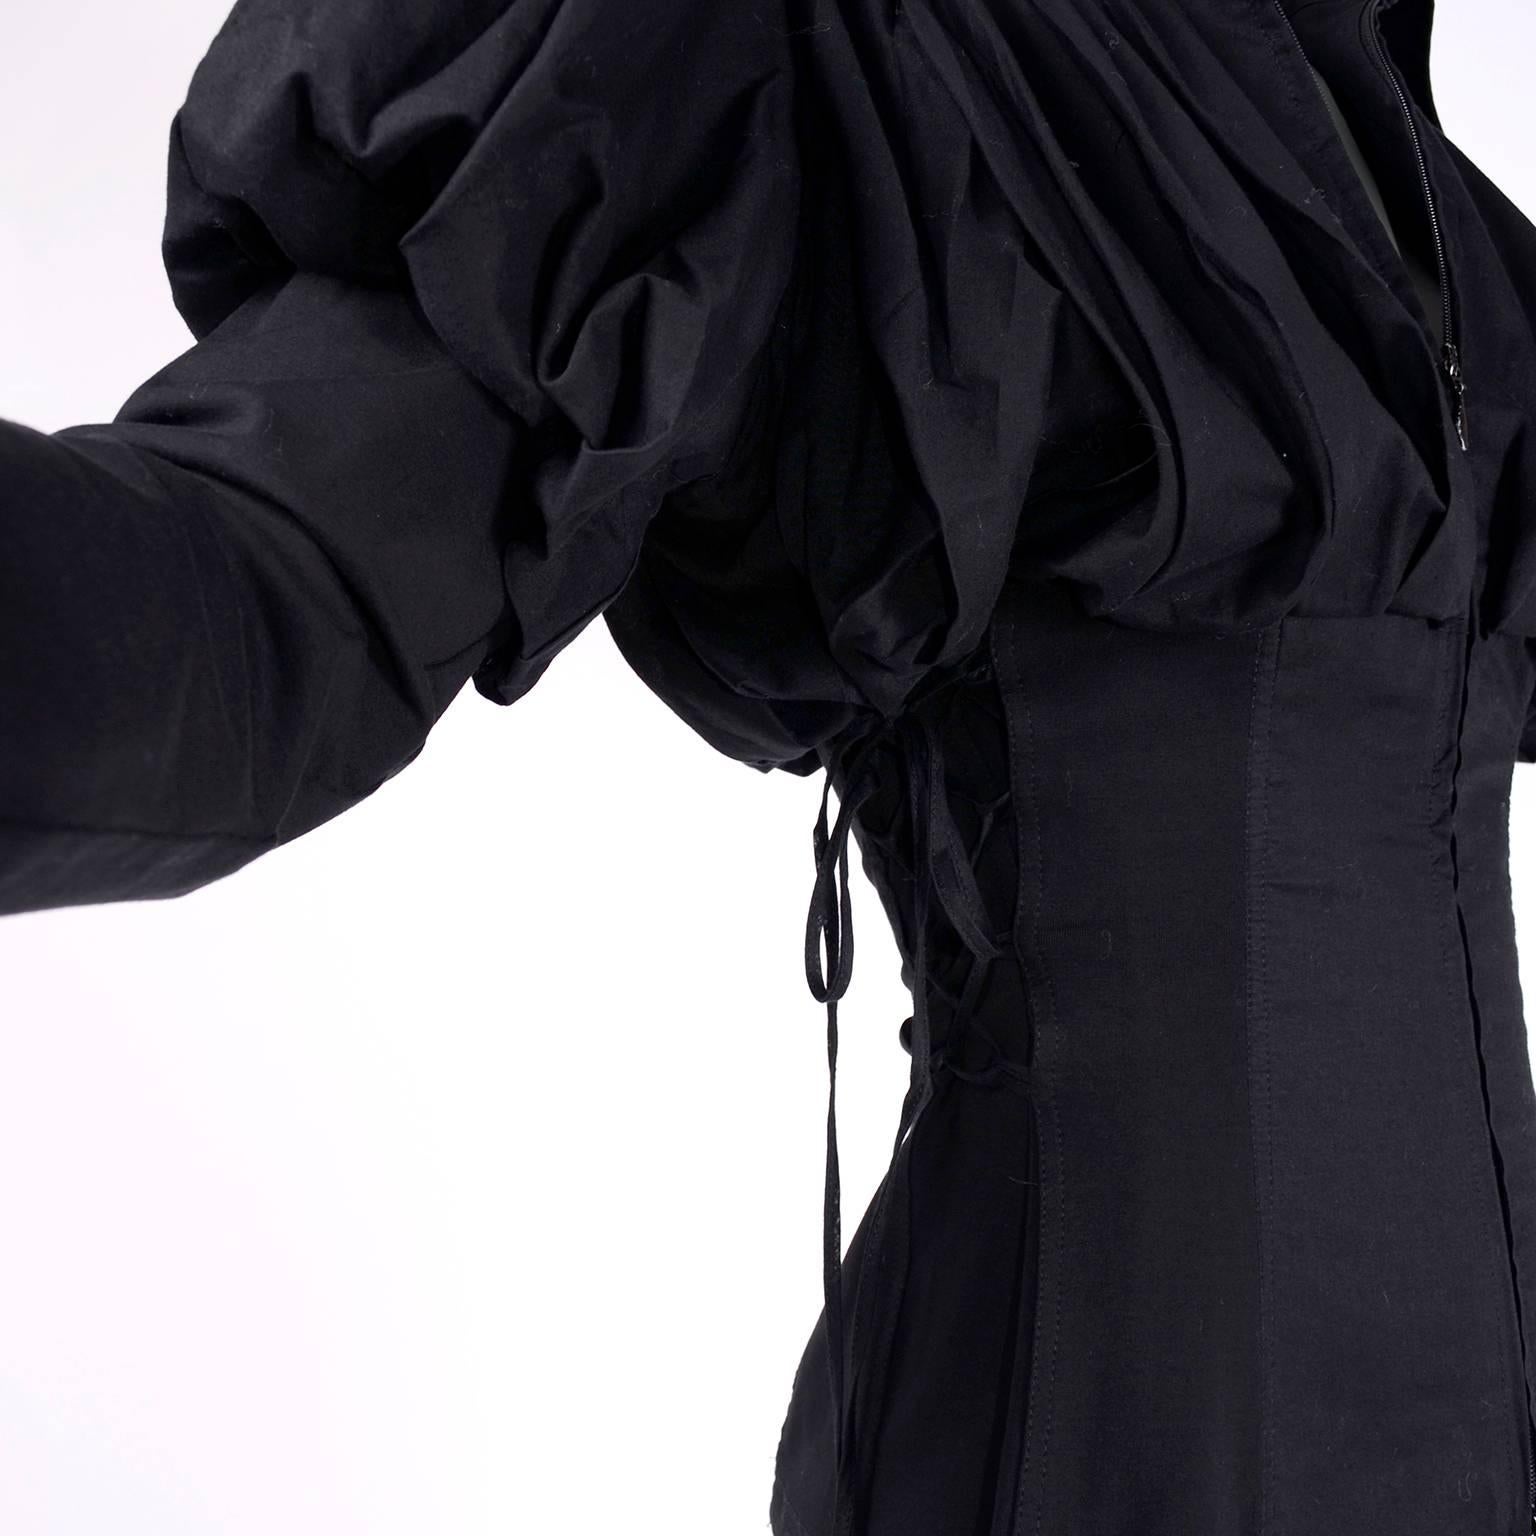 anne fontaine black blouse